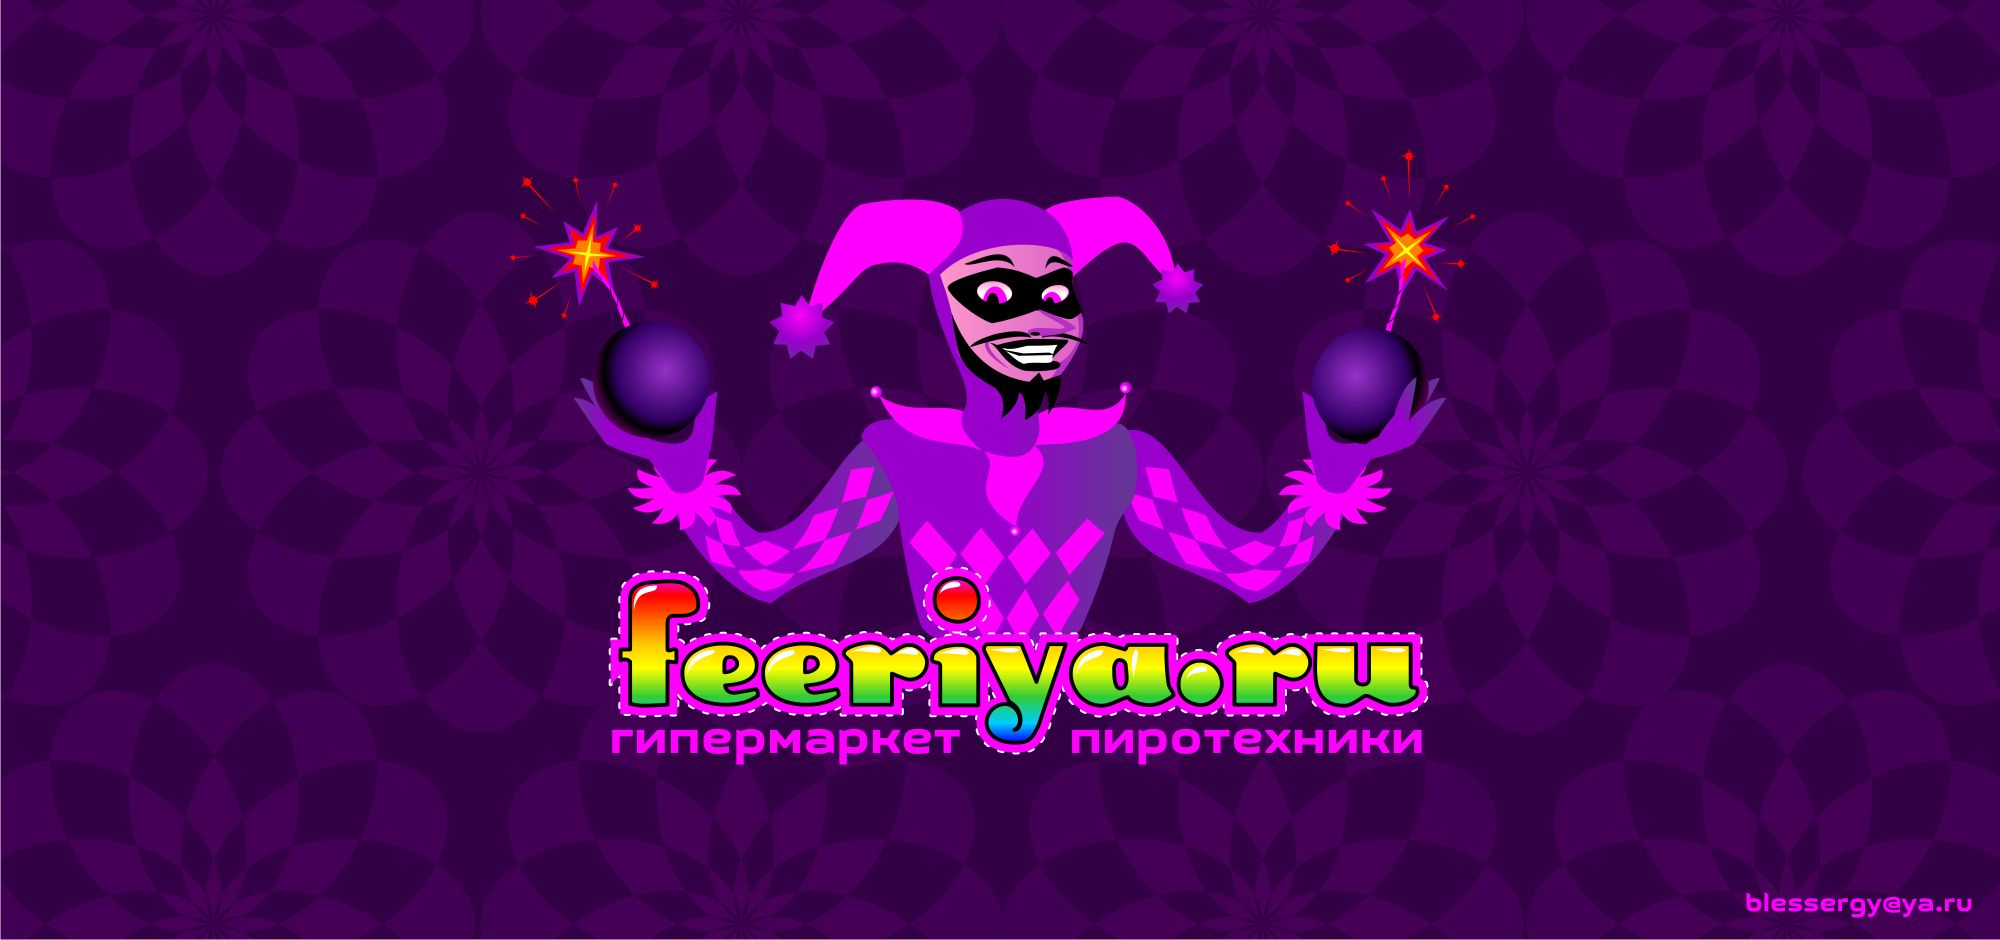 Логотип для feeriya.ru - дизайнер blessergy